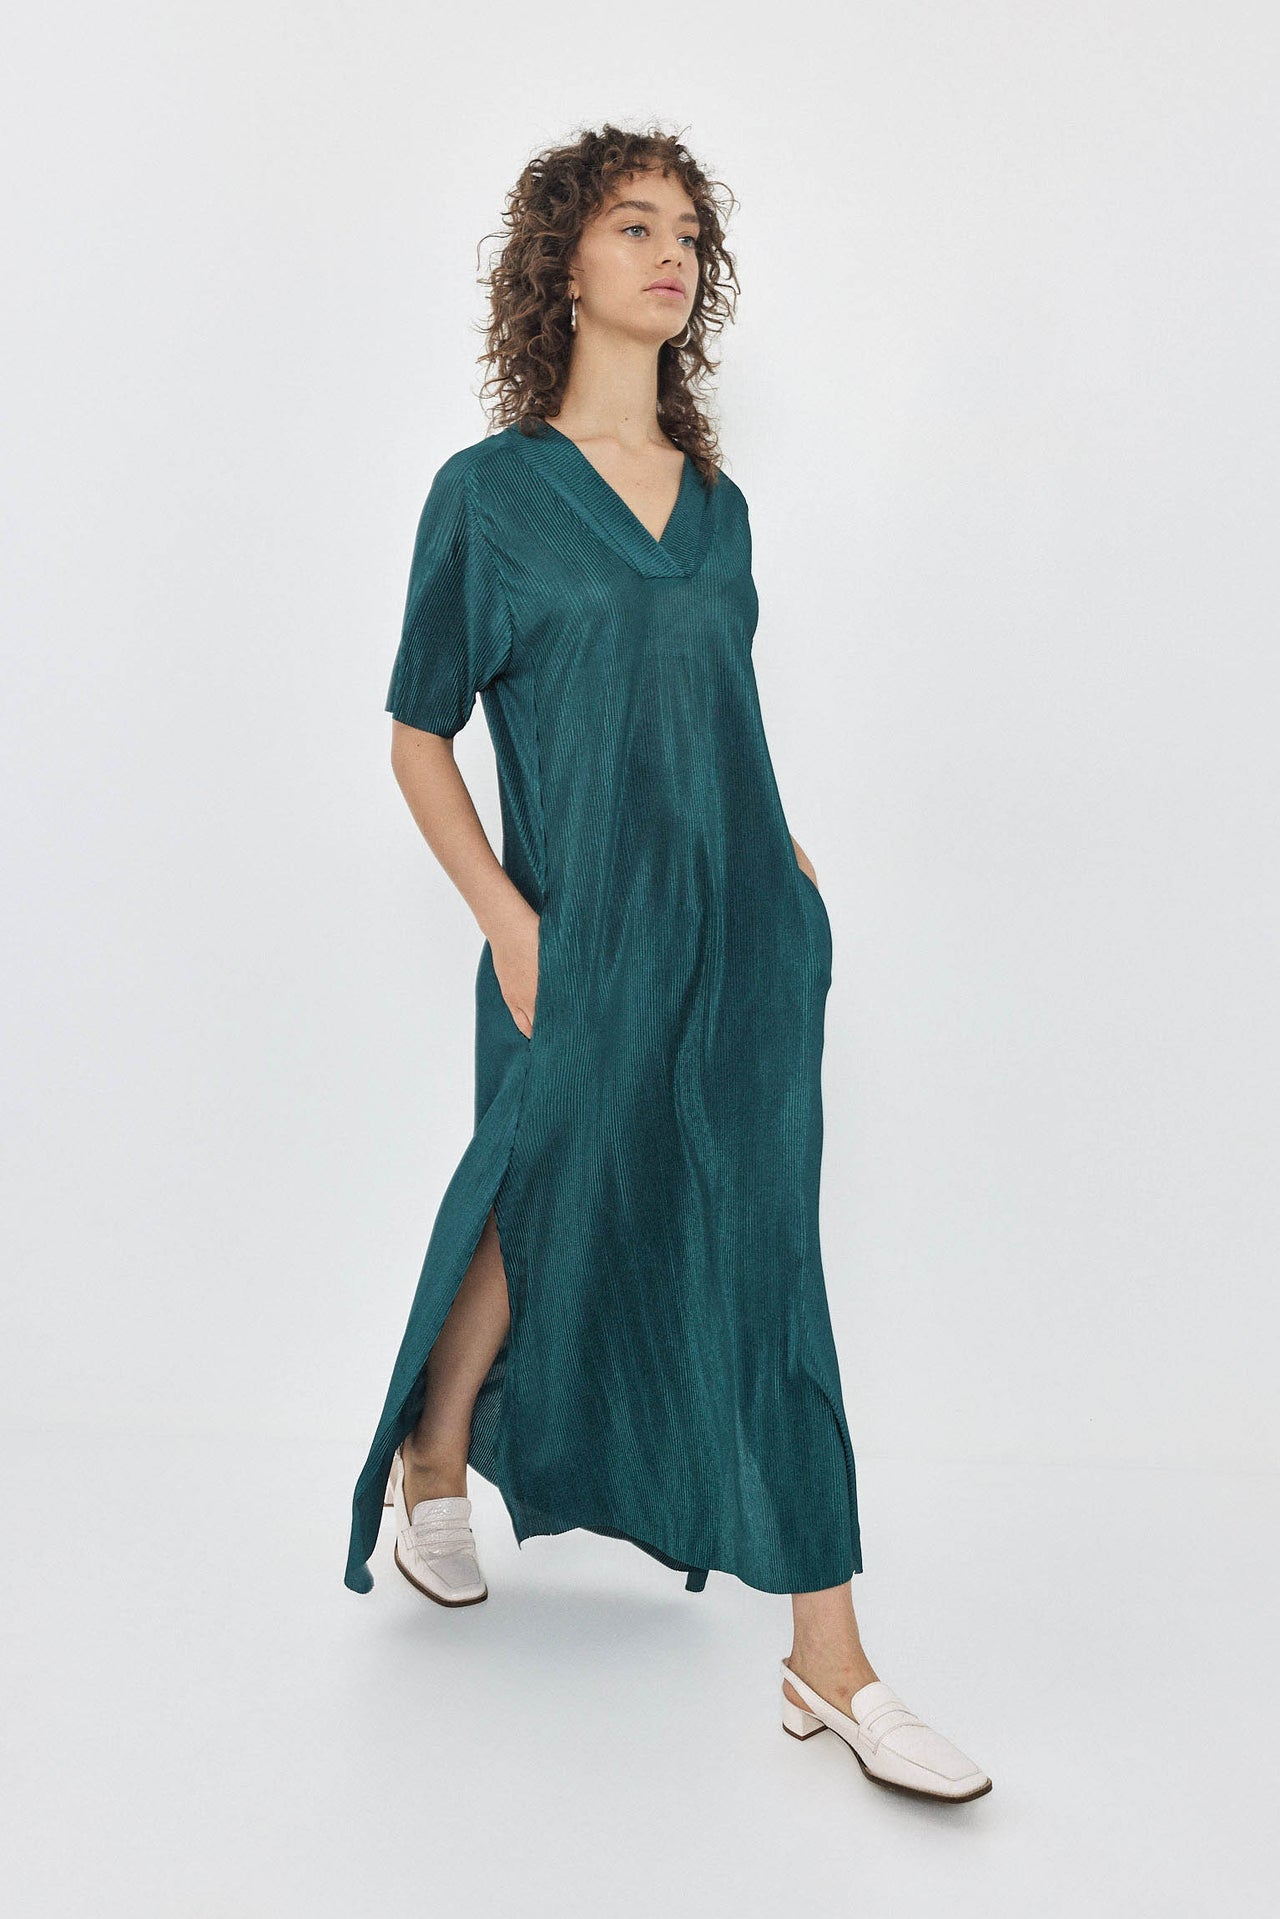 FLARE Dress S24 (S-M) - Bottle Green